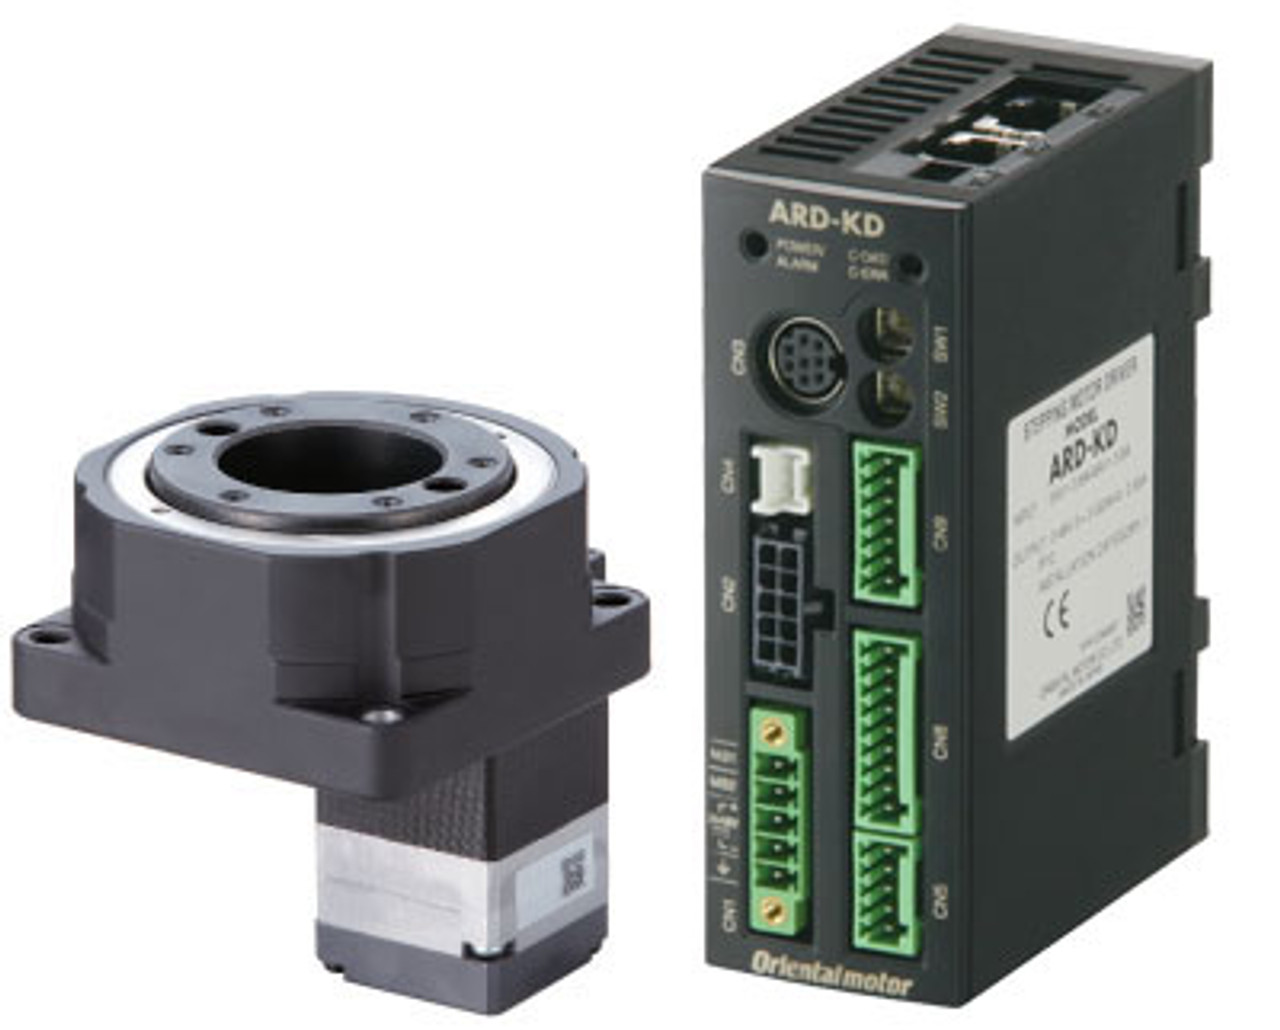 DGM60-ARBK / ARD-KD - Product Image